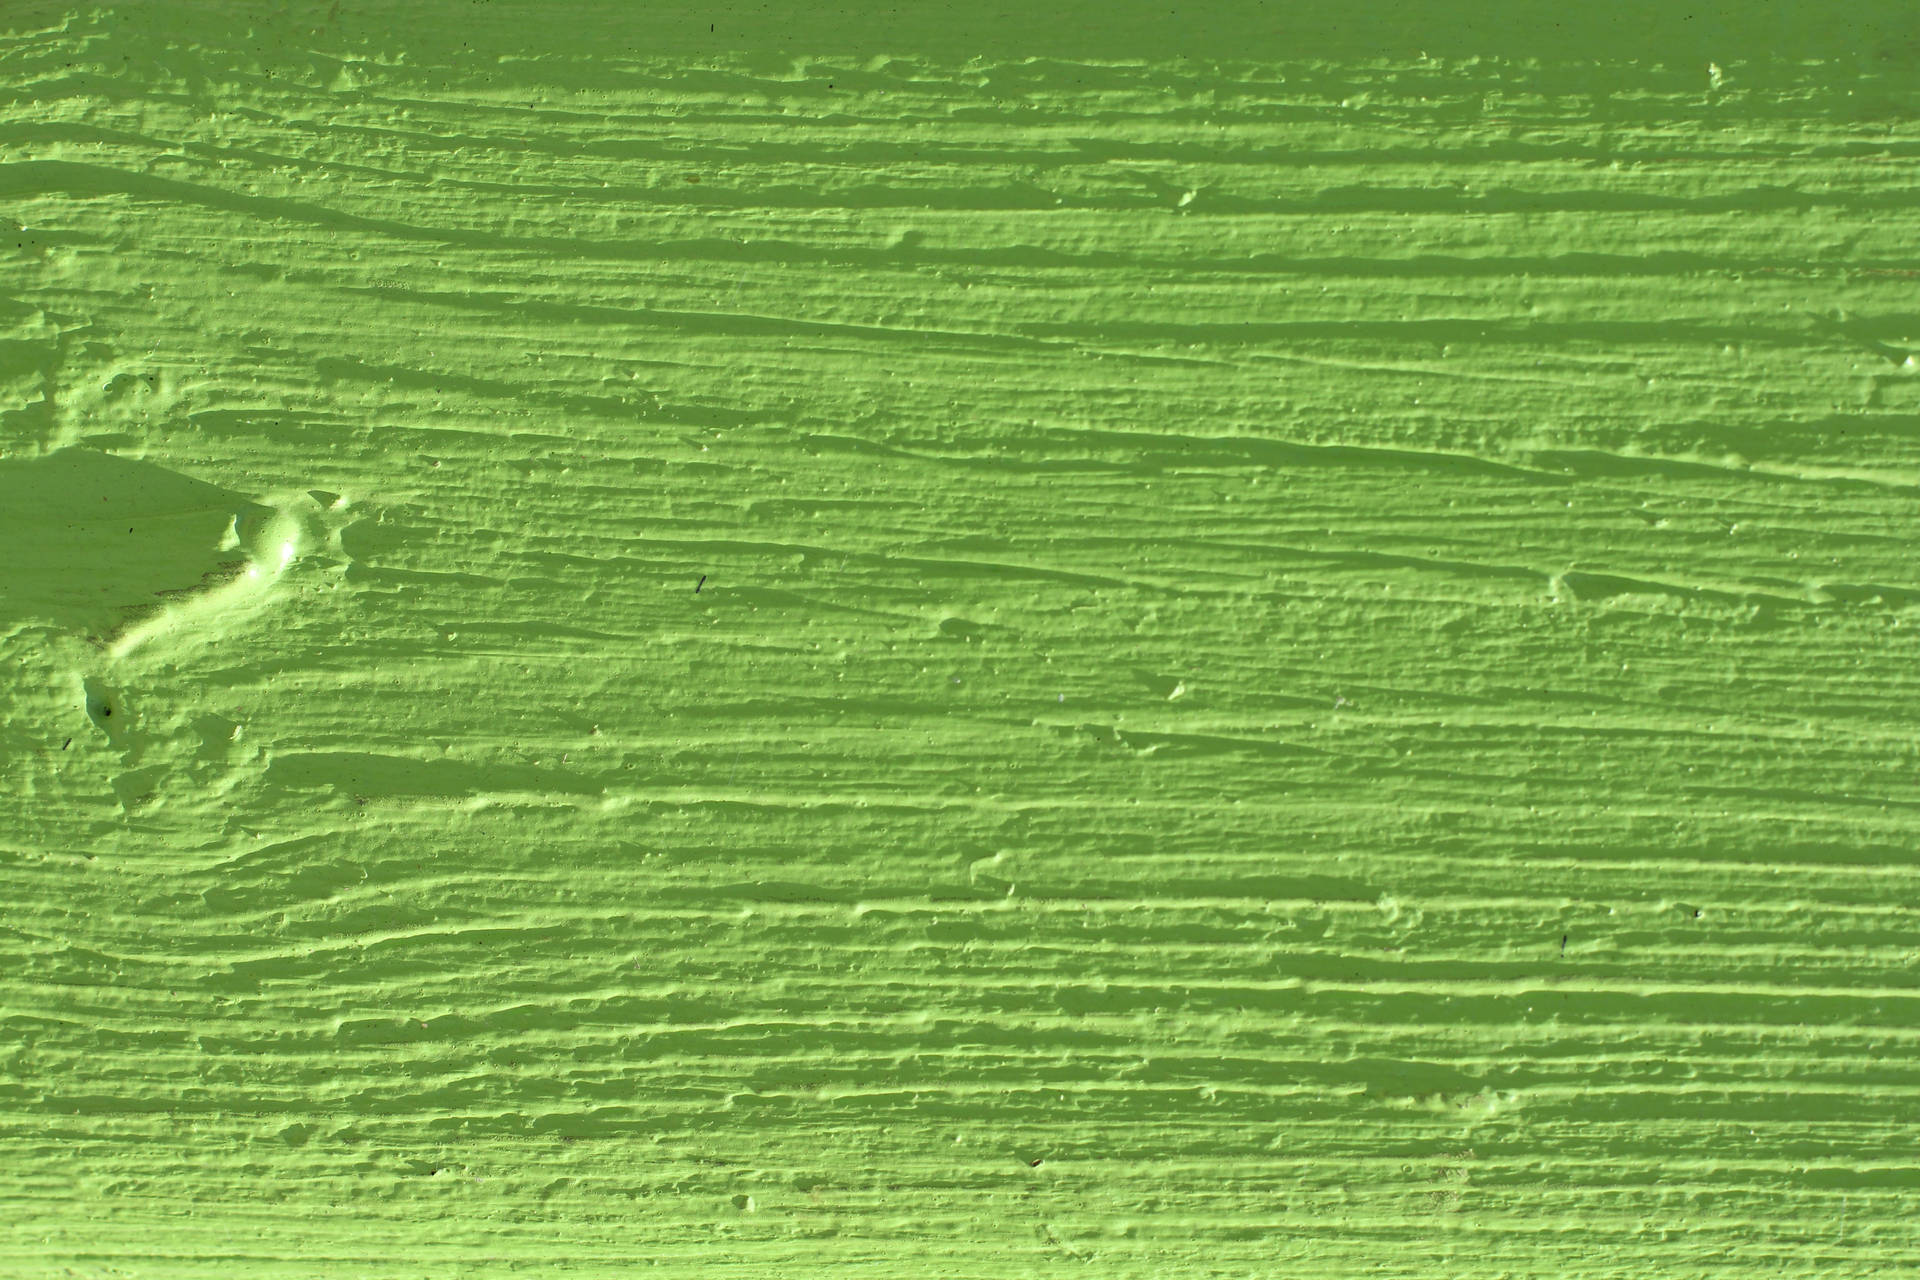 Sage Green 5184X3456 wallpaper